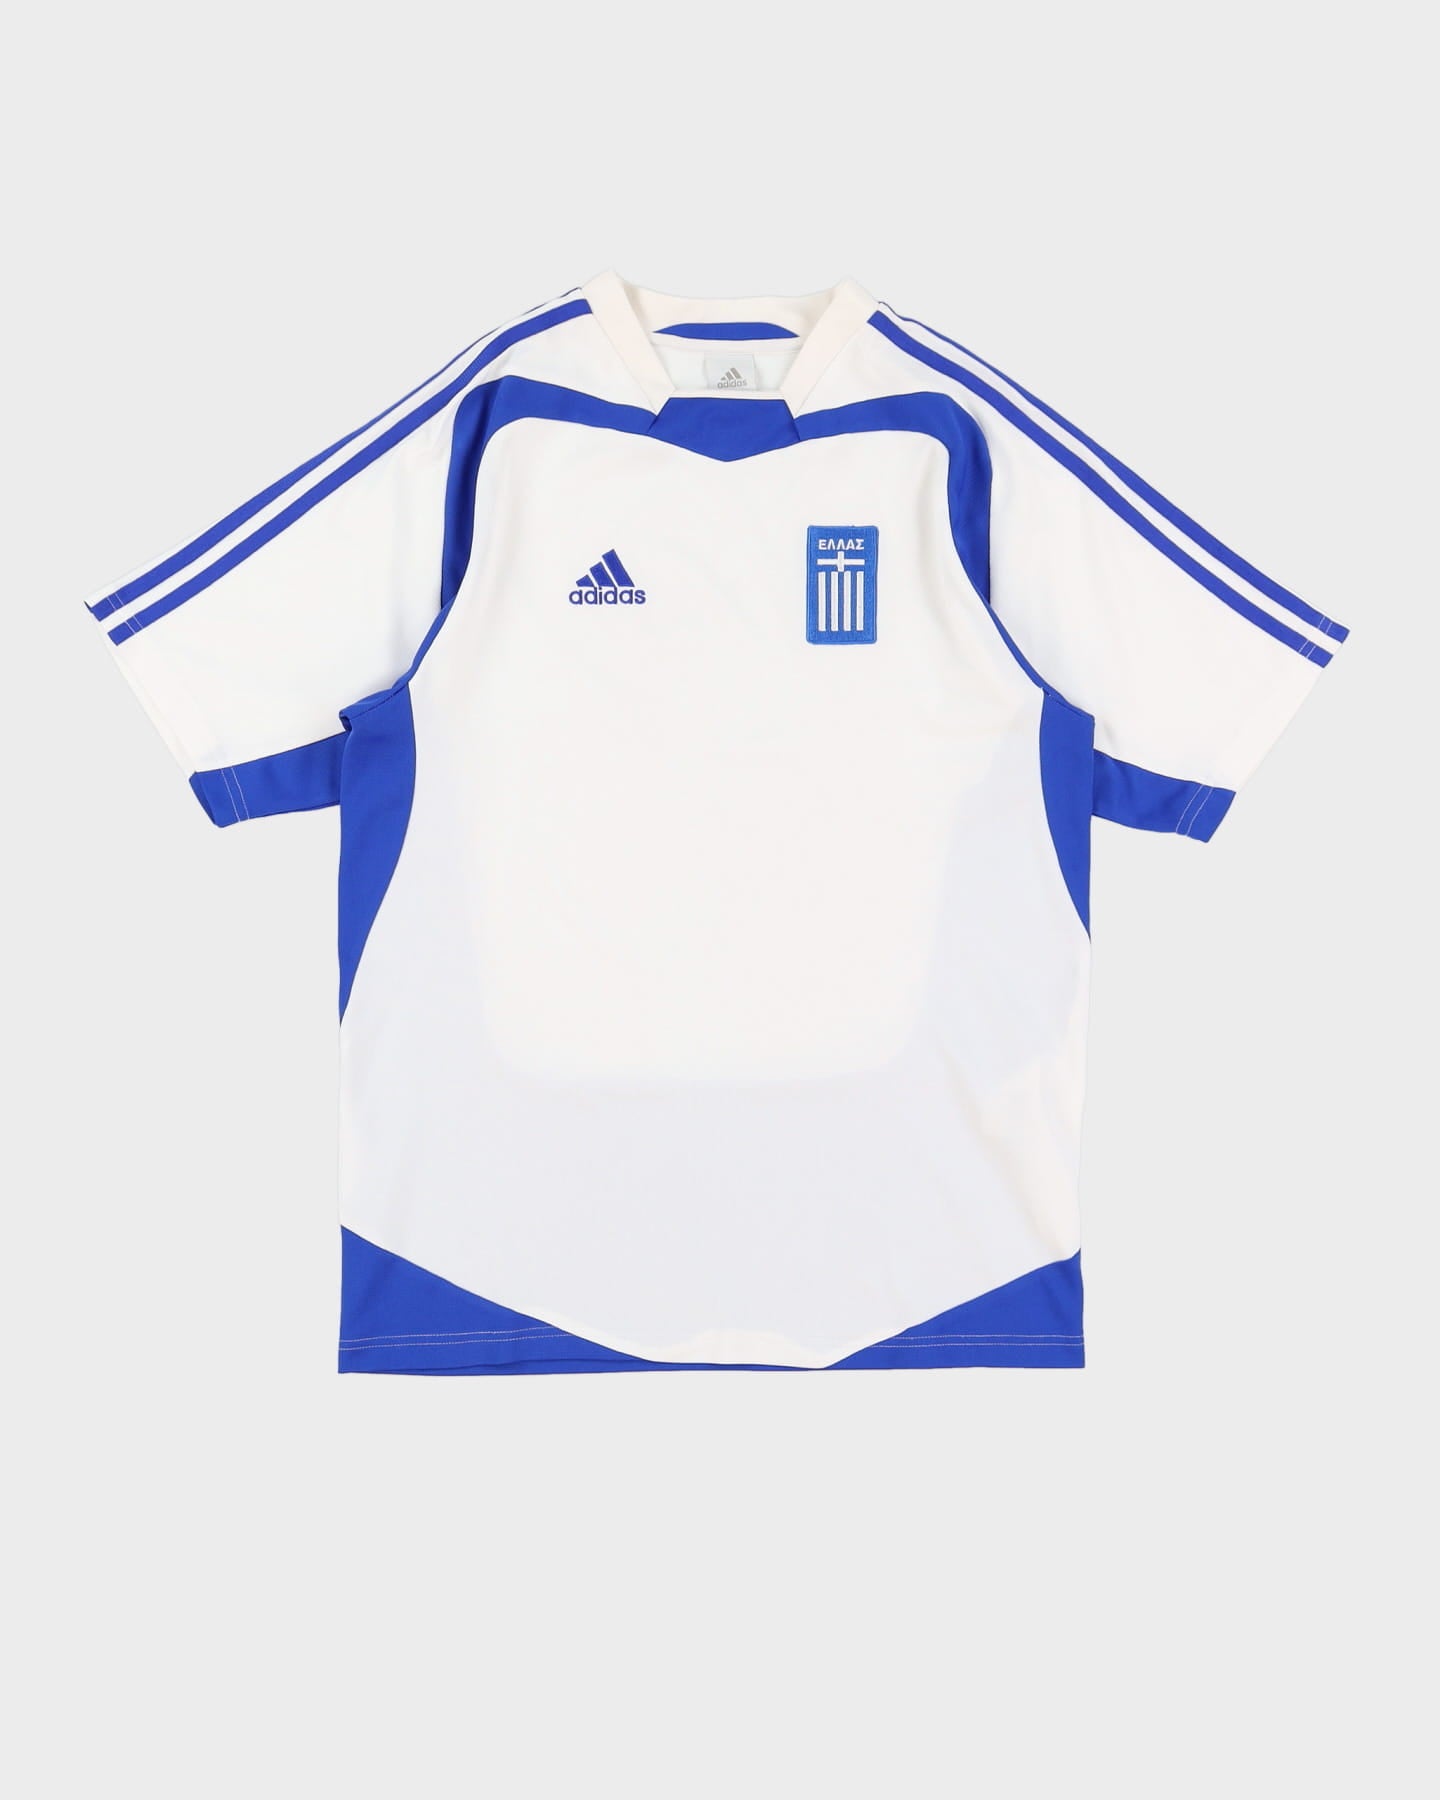 2004 Greece Euro Champions White Away Adidas Football Shirt / Jersey - S